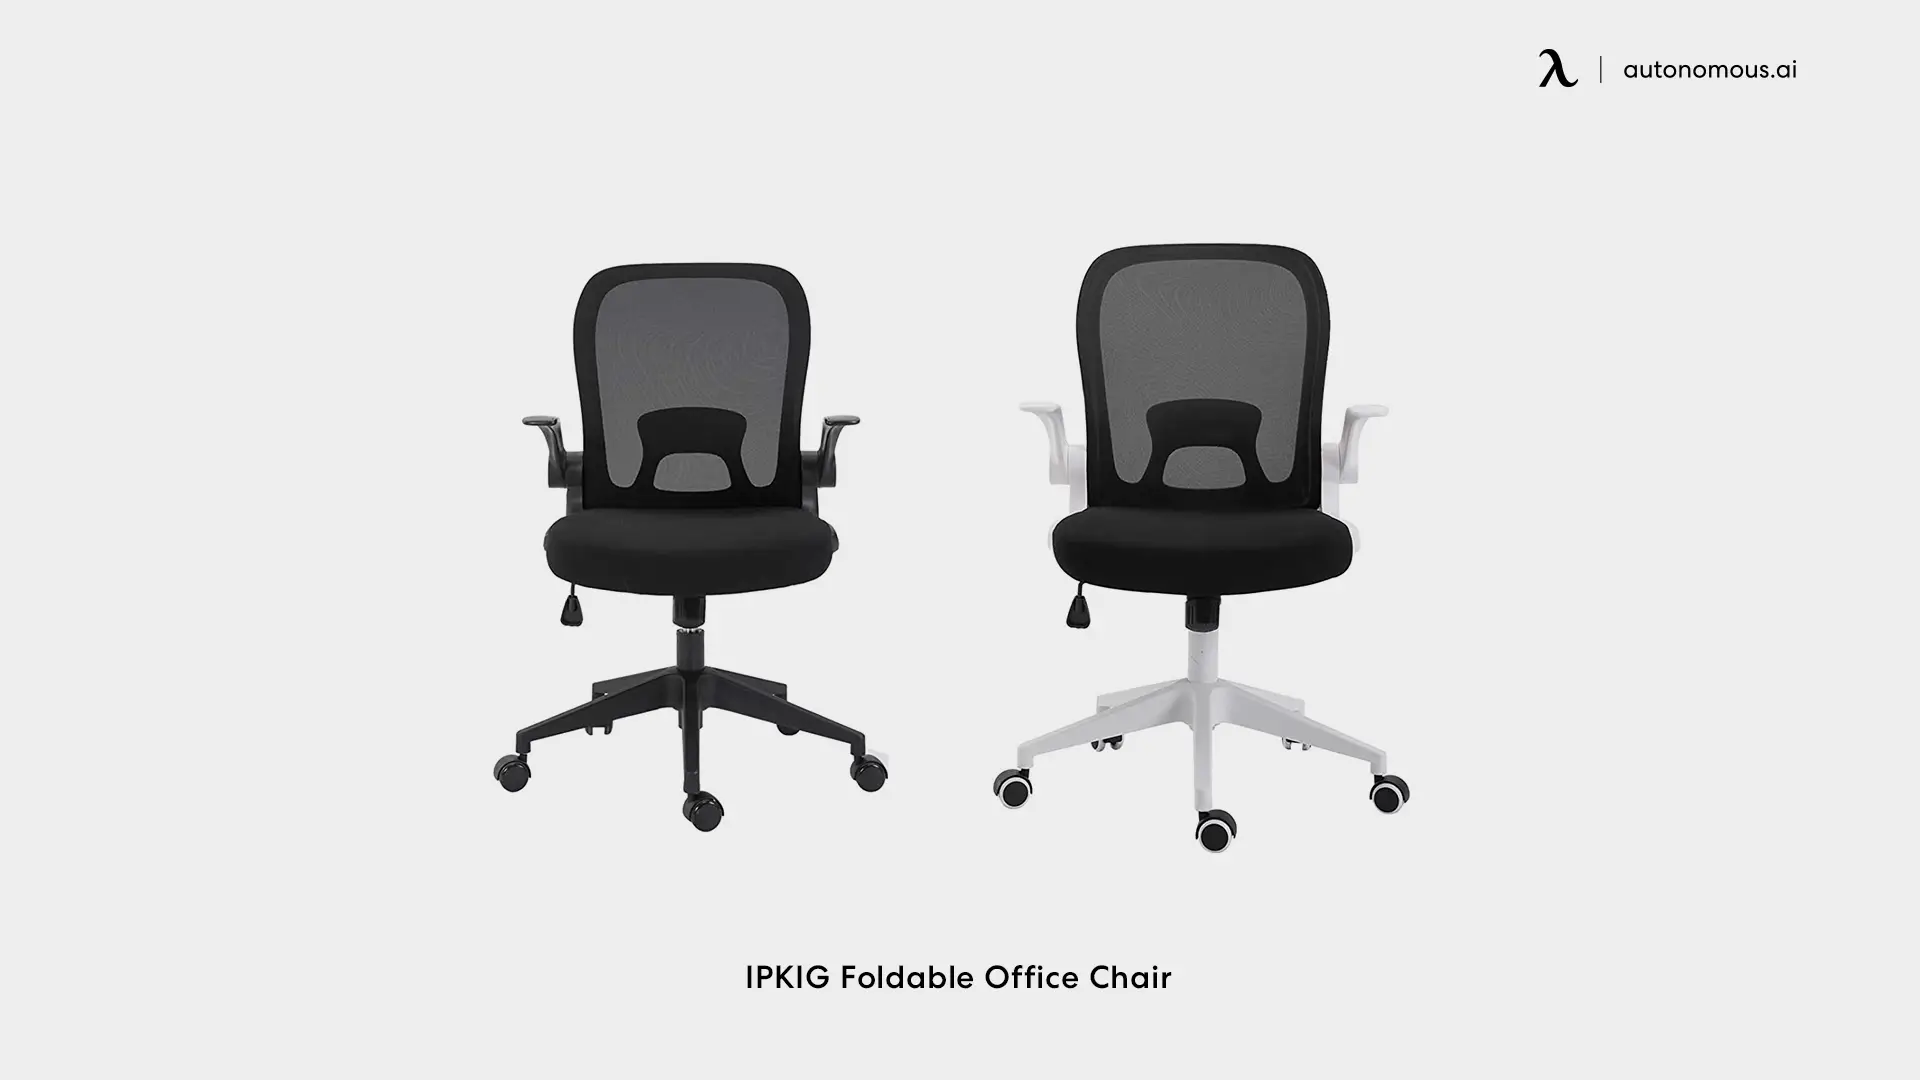 IPKIG Foldable Office Chair